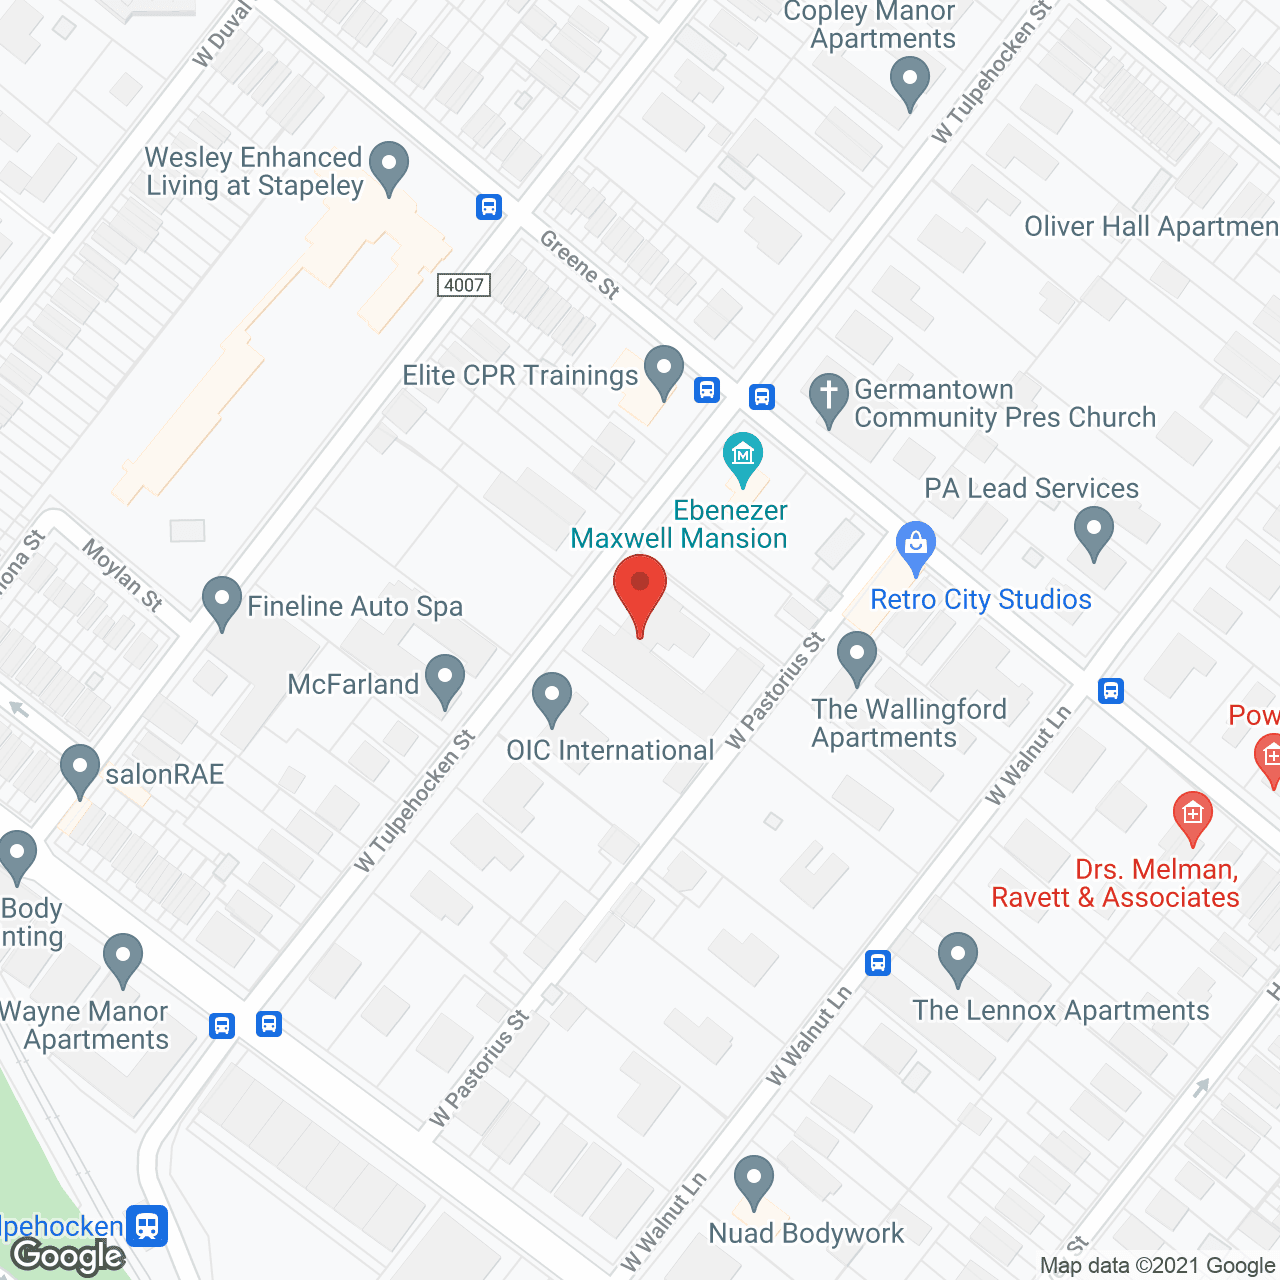 Unitarian Universalist House in google map